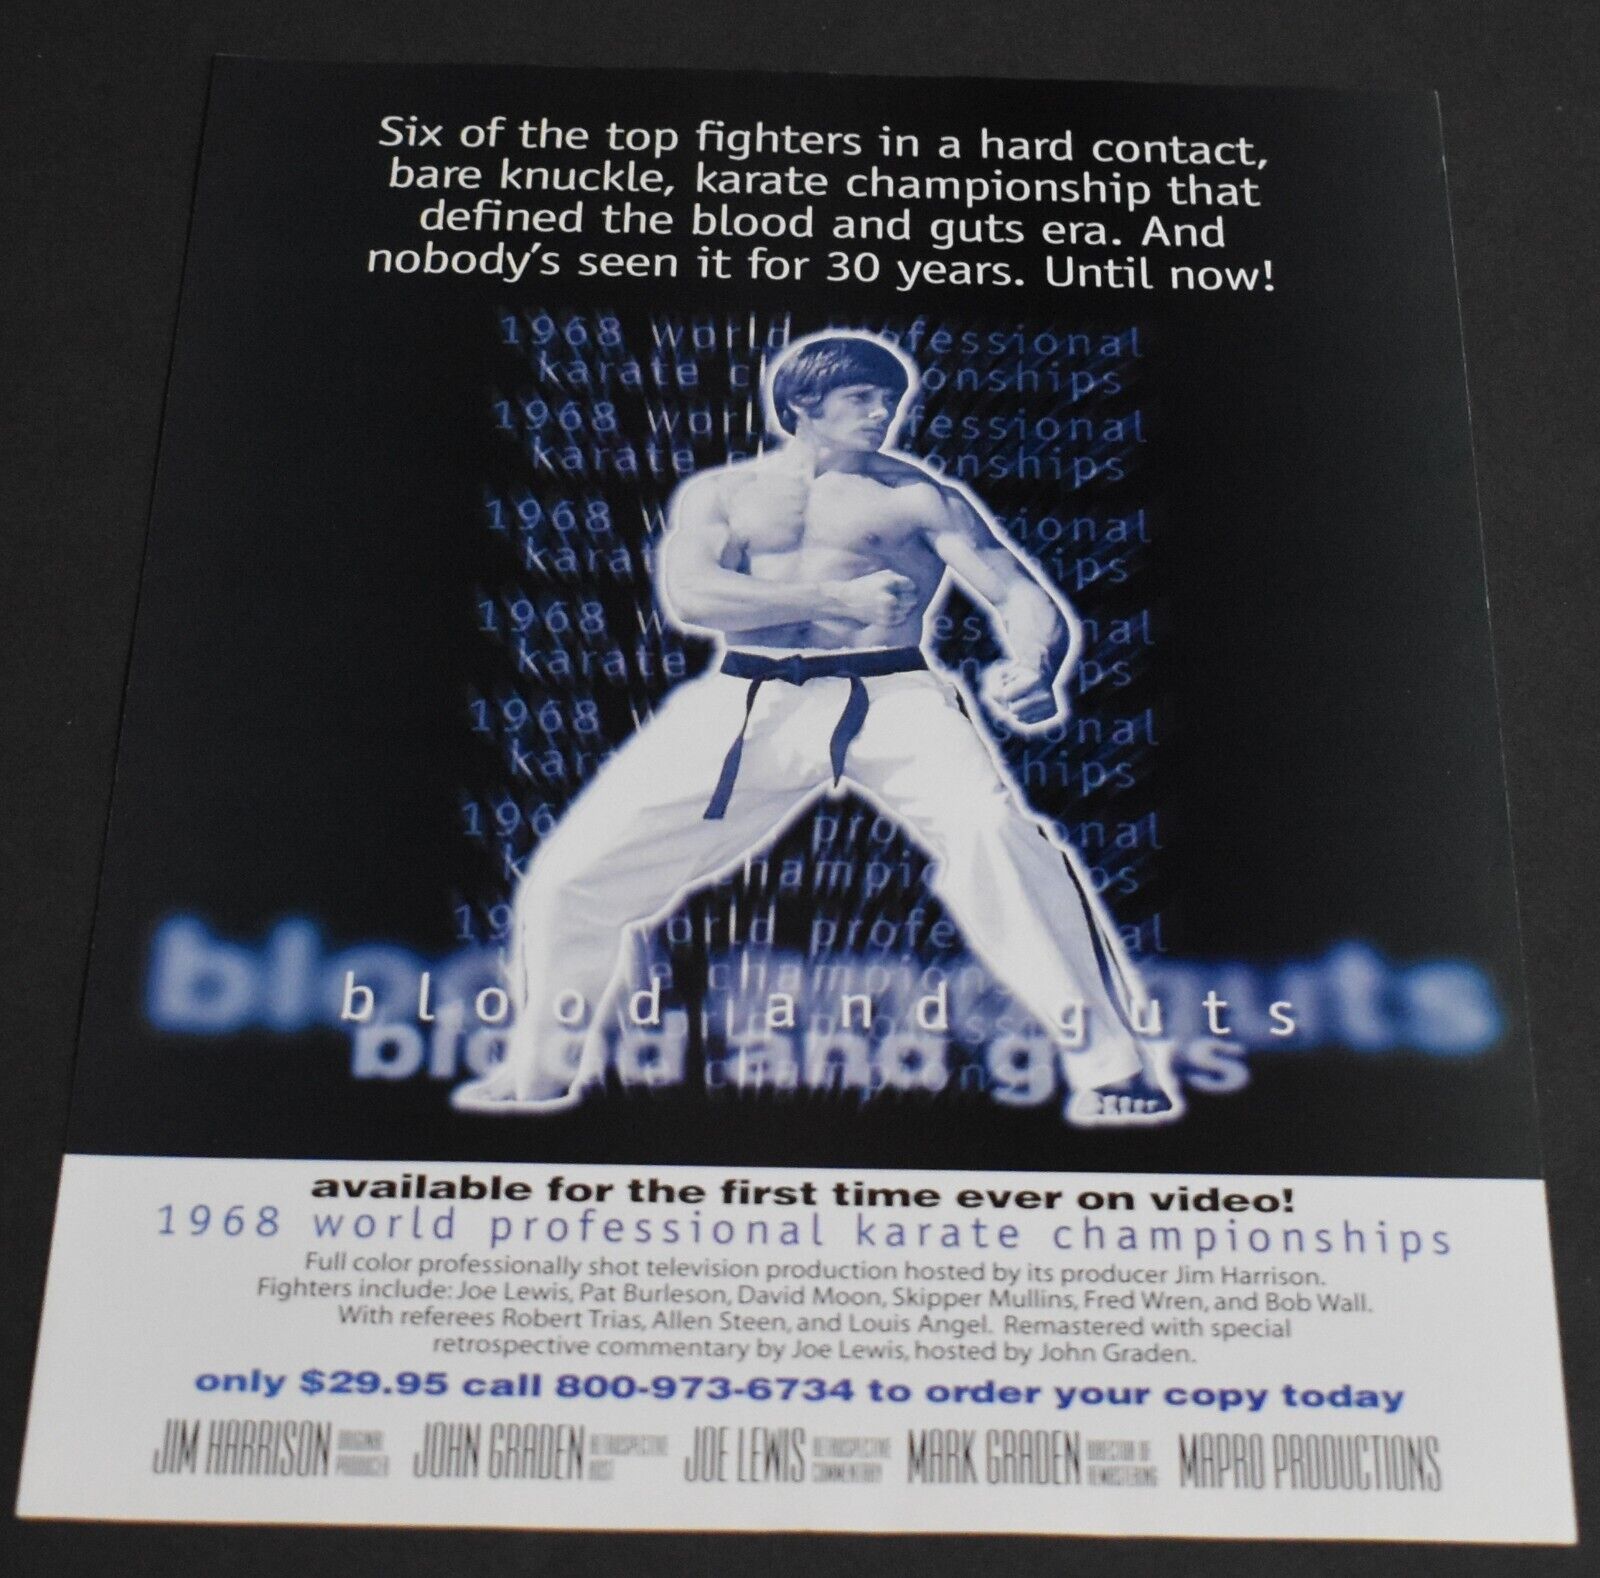 1998 Print Ad 1968 World Professional Karate Championships Joe Lewis Video Art